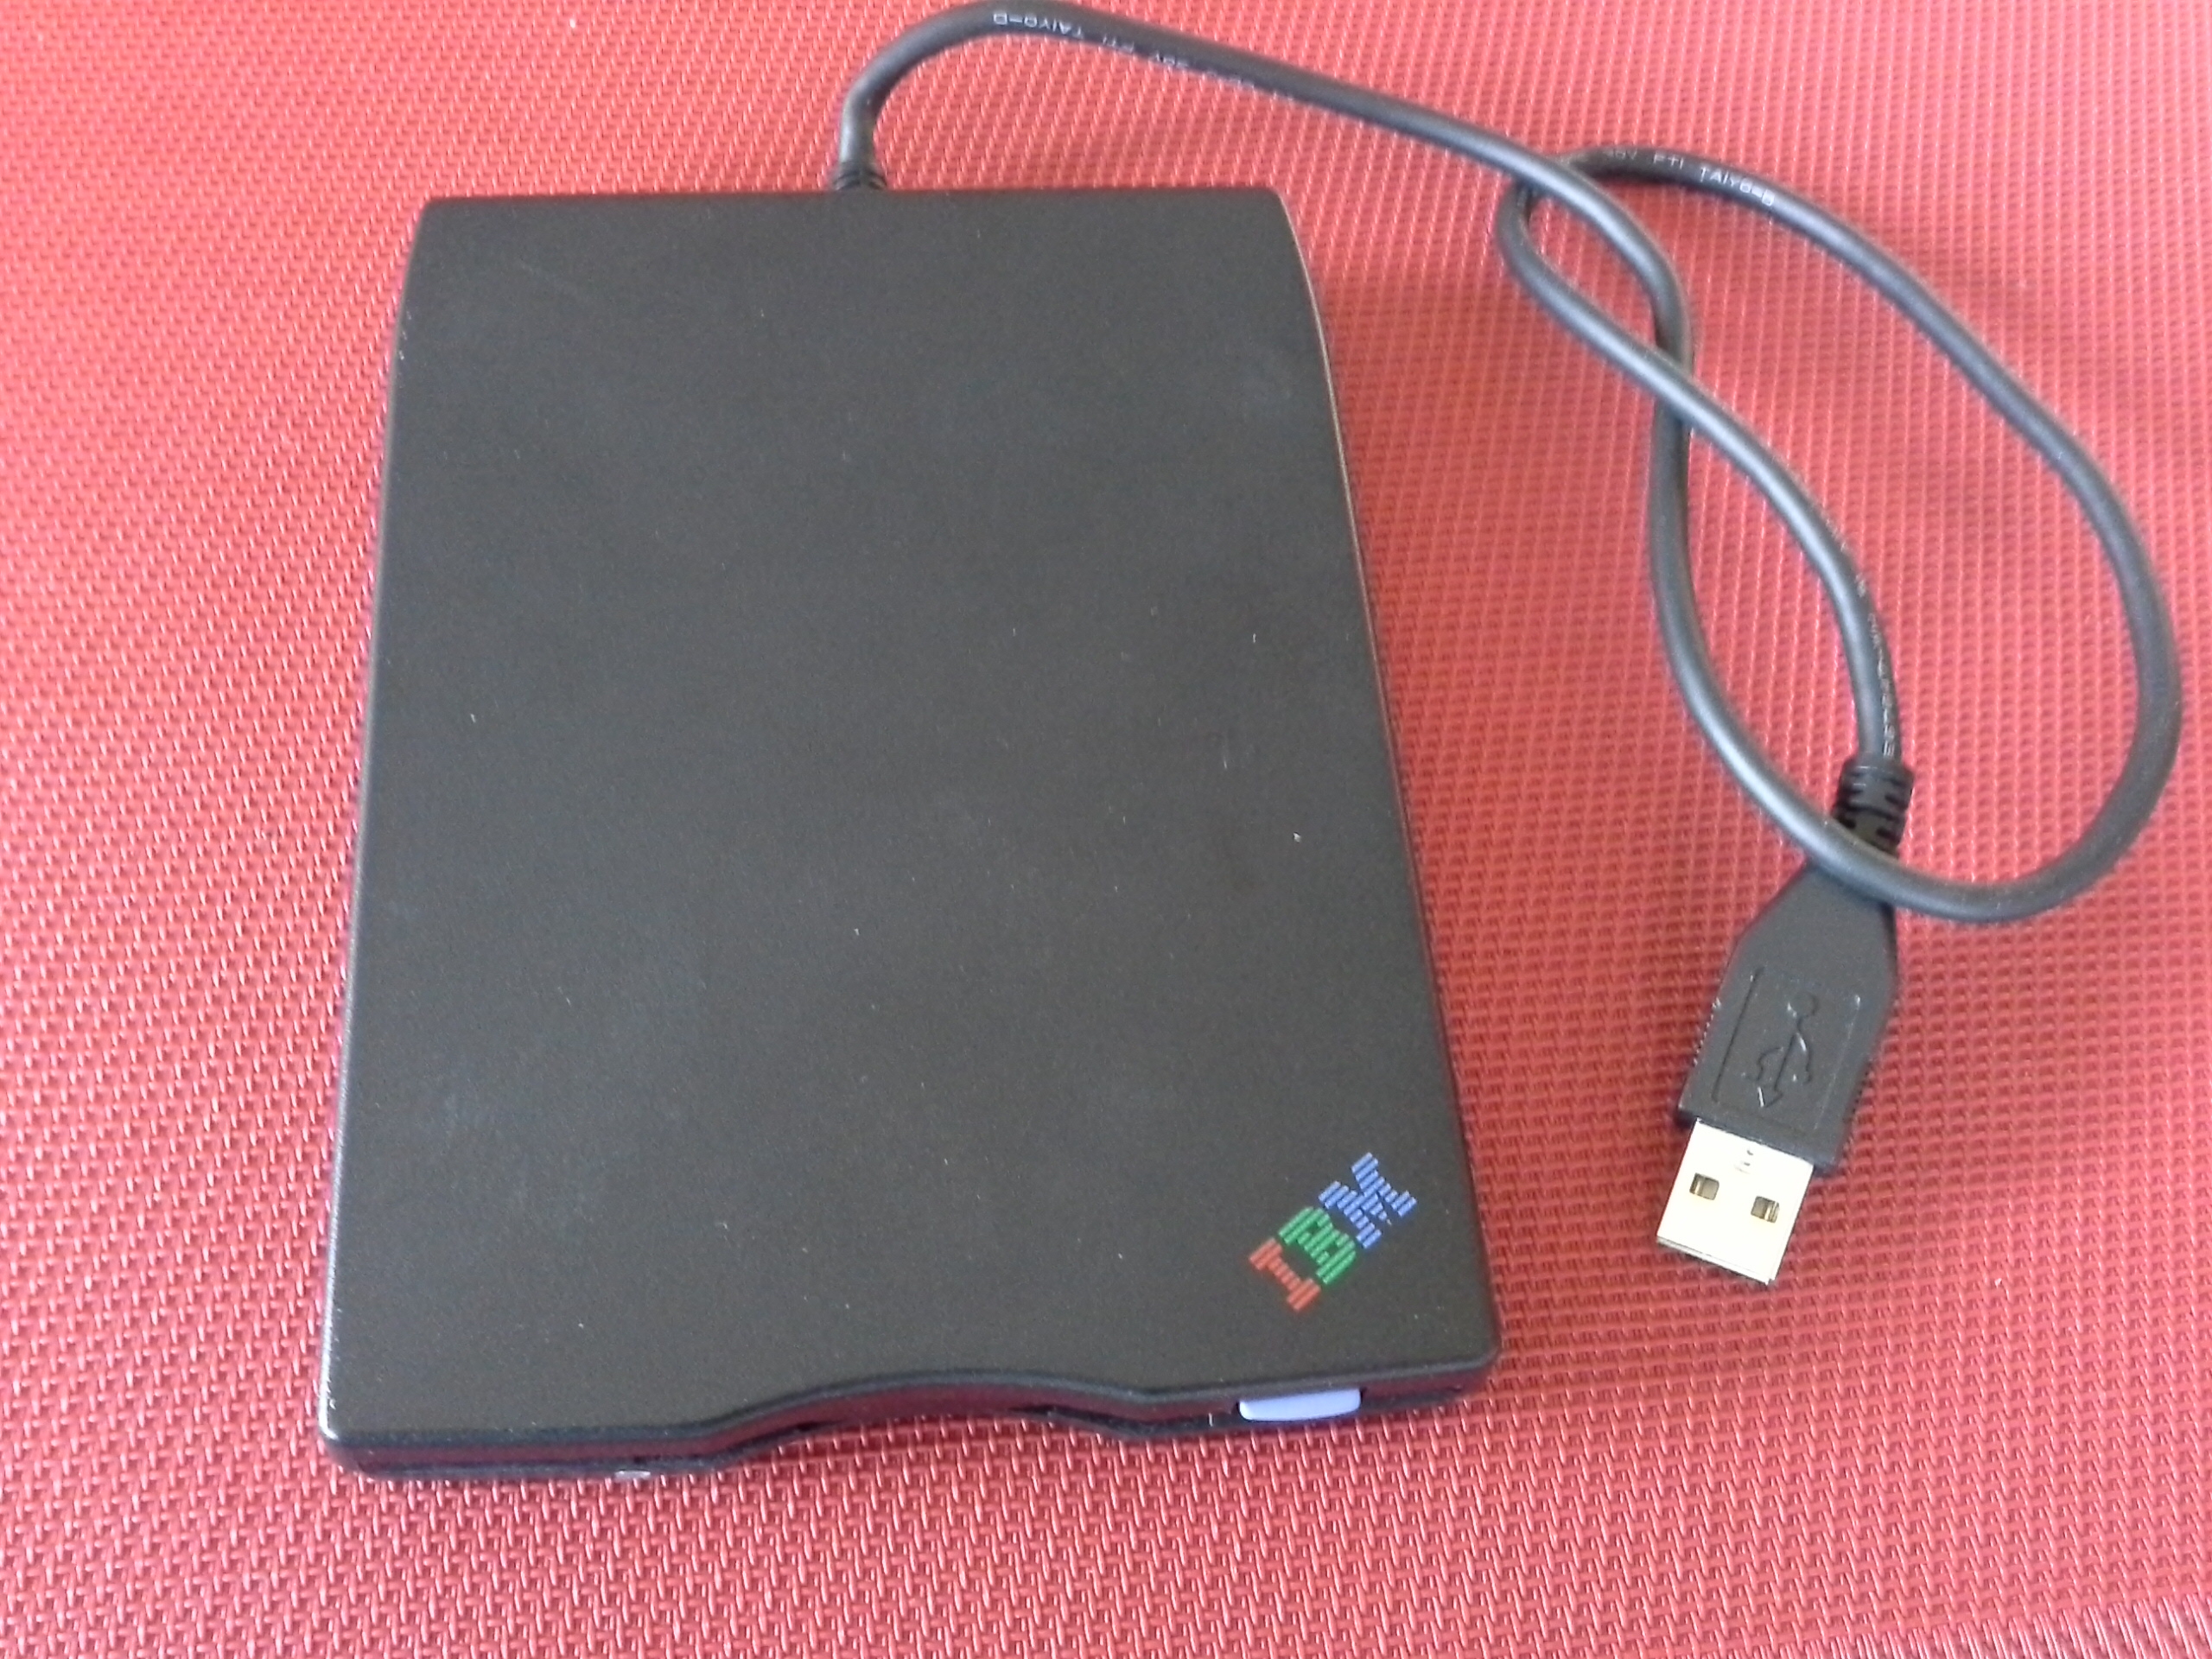 IBM MPF32E-USB externes Diskettenlaufwerk